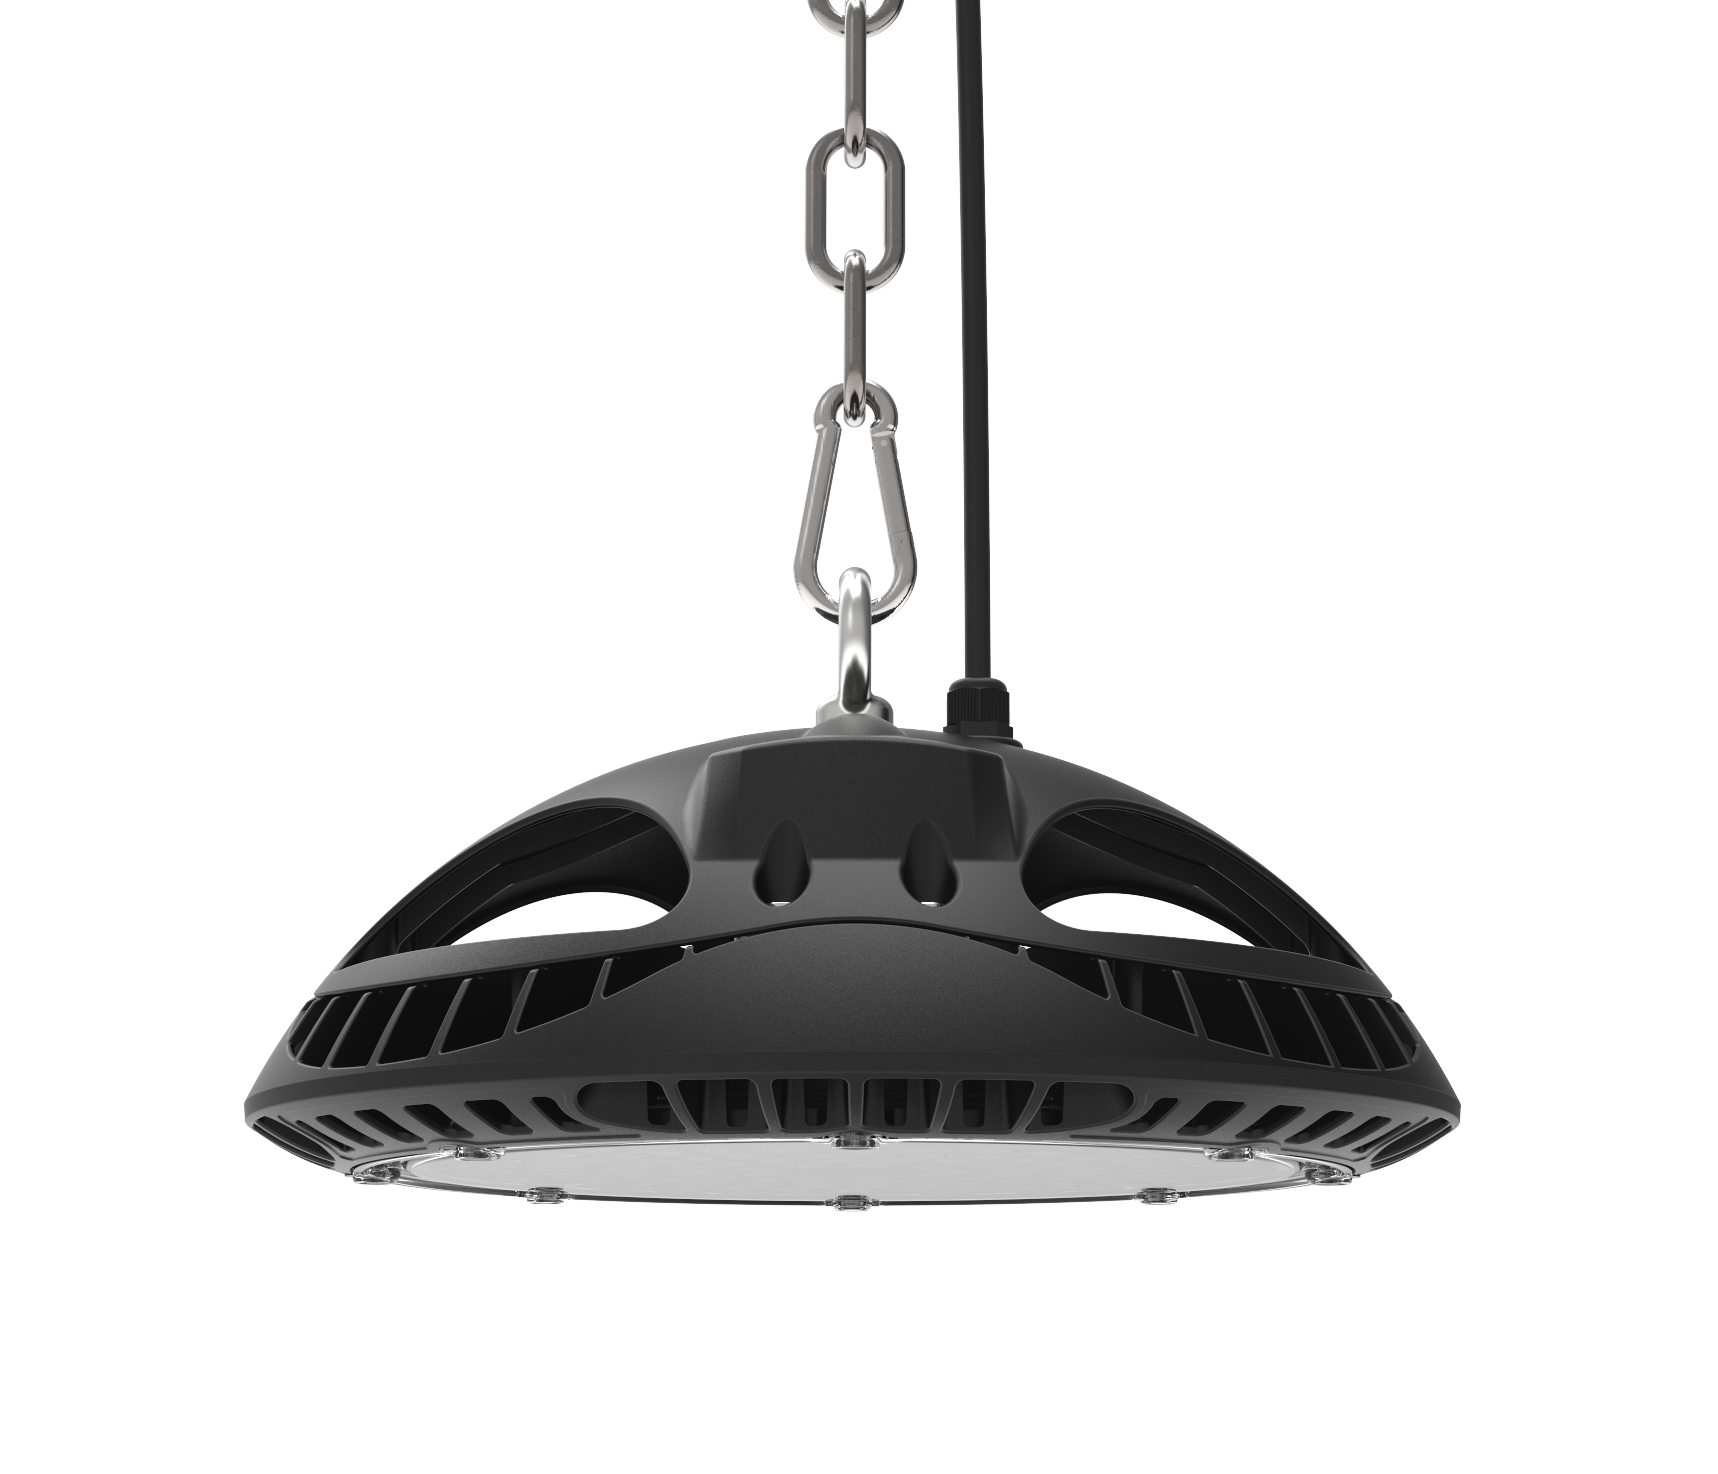 200W Apollo Pro LED Highbay 5700K 100° Beam Angle with Glare Shield 26,000lm Finish: Graphite Black